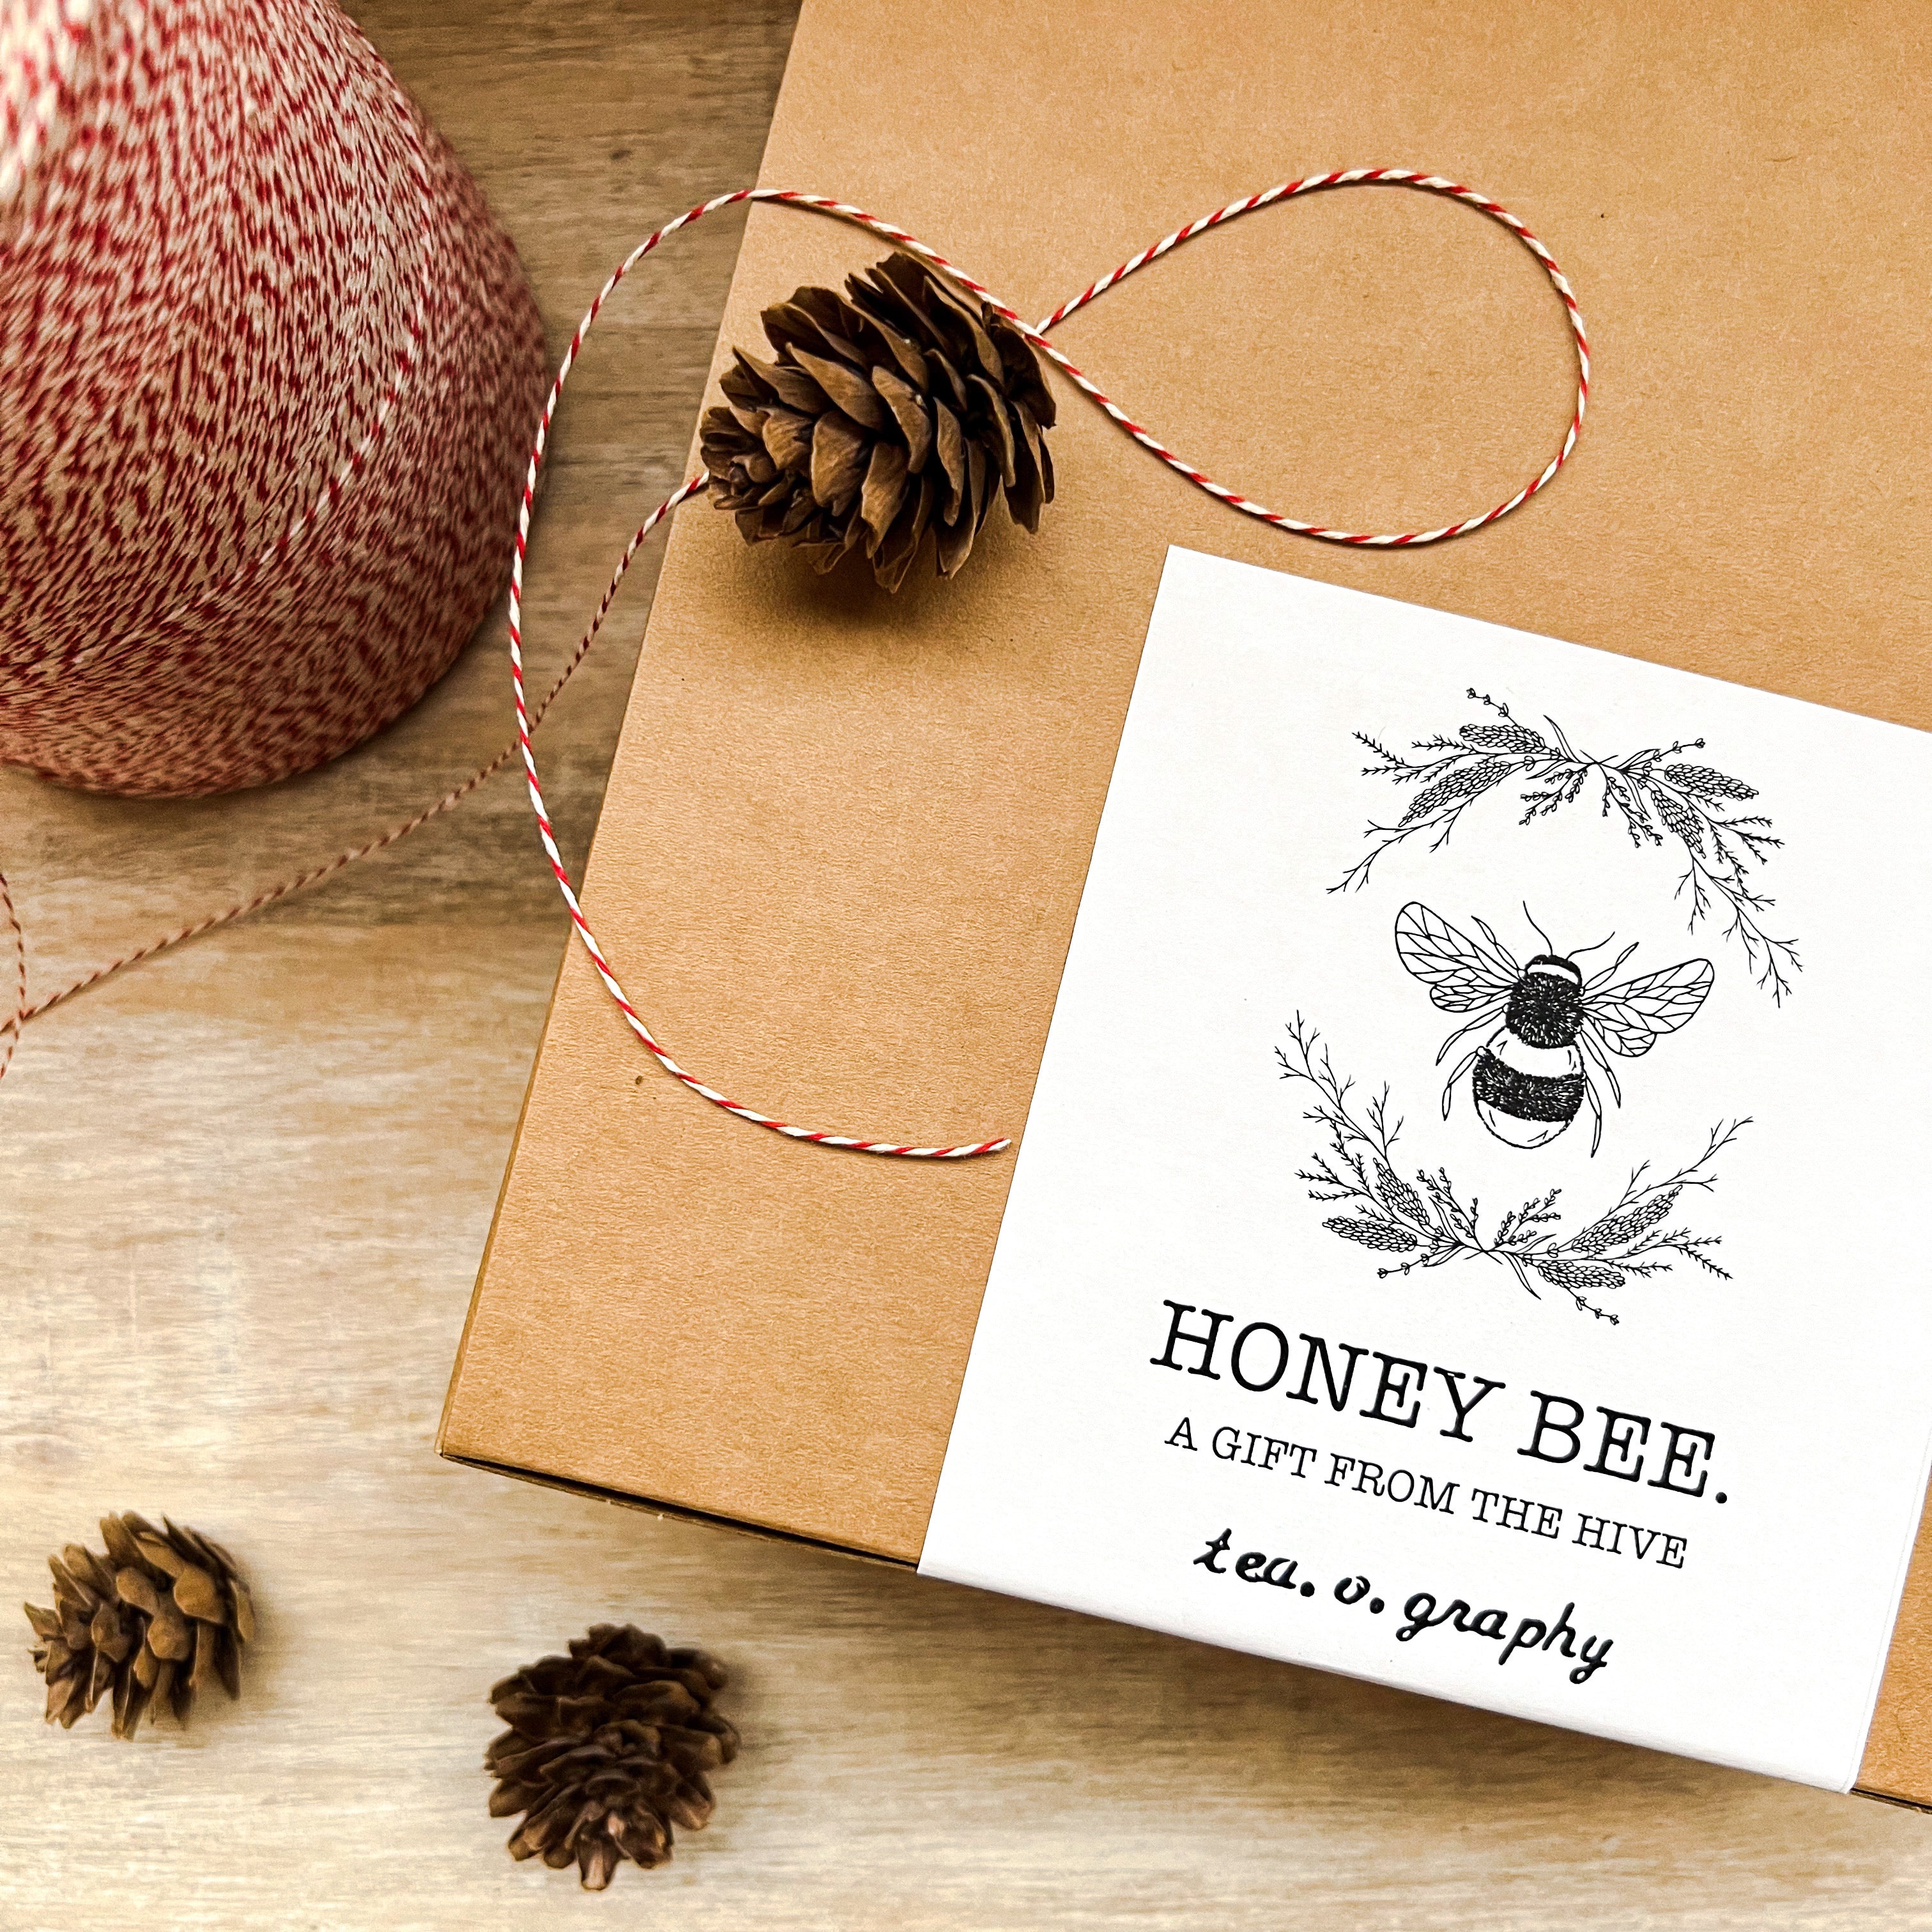 Honey Bee Box